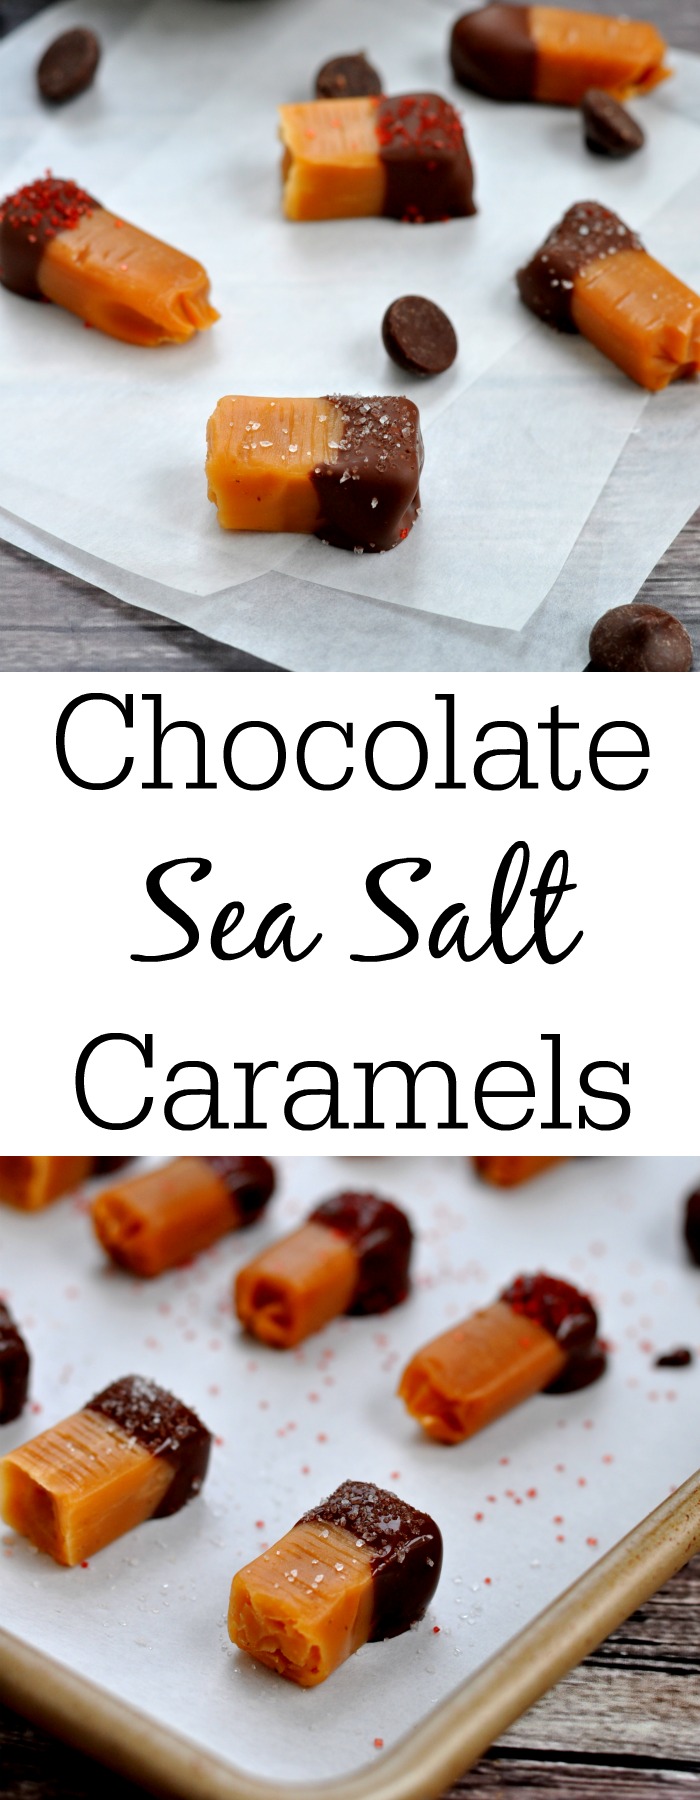 Chocolate Sea Salt Caramels